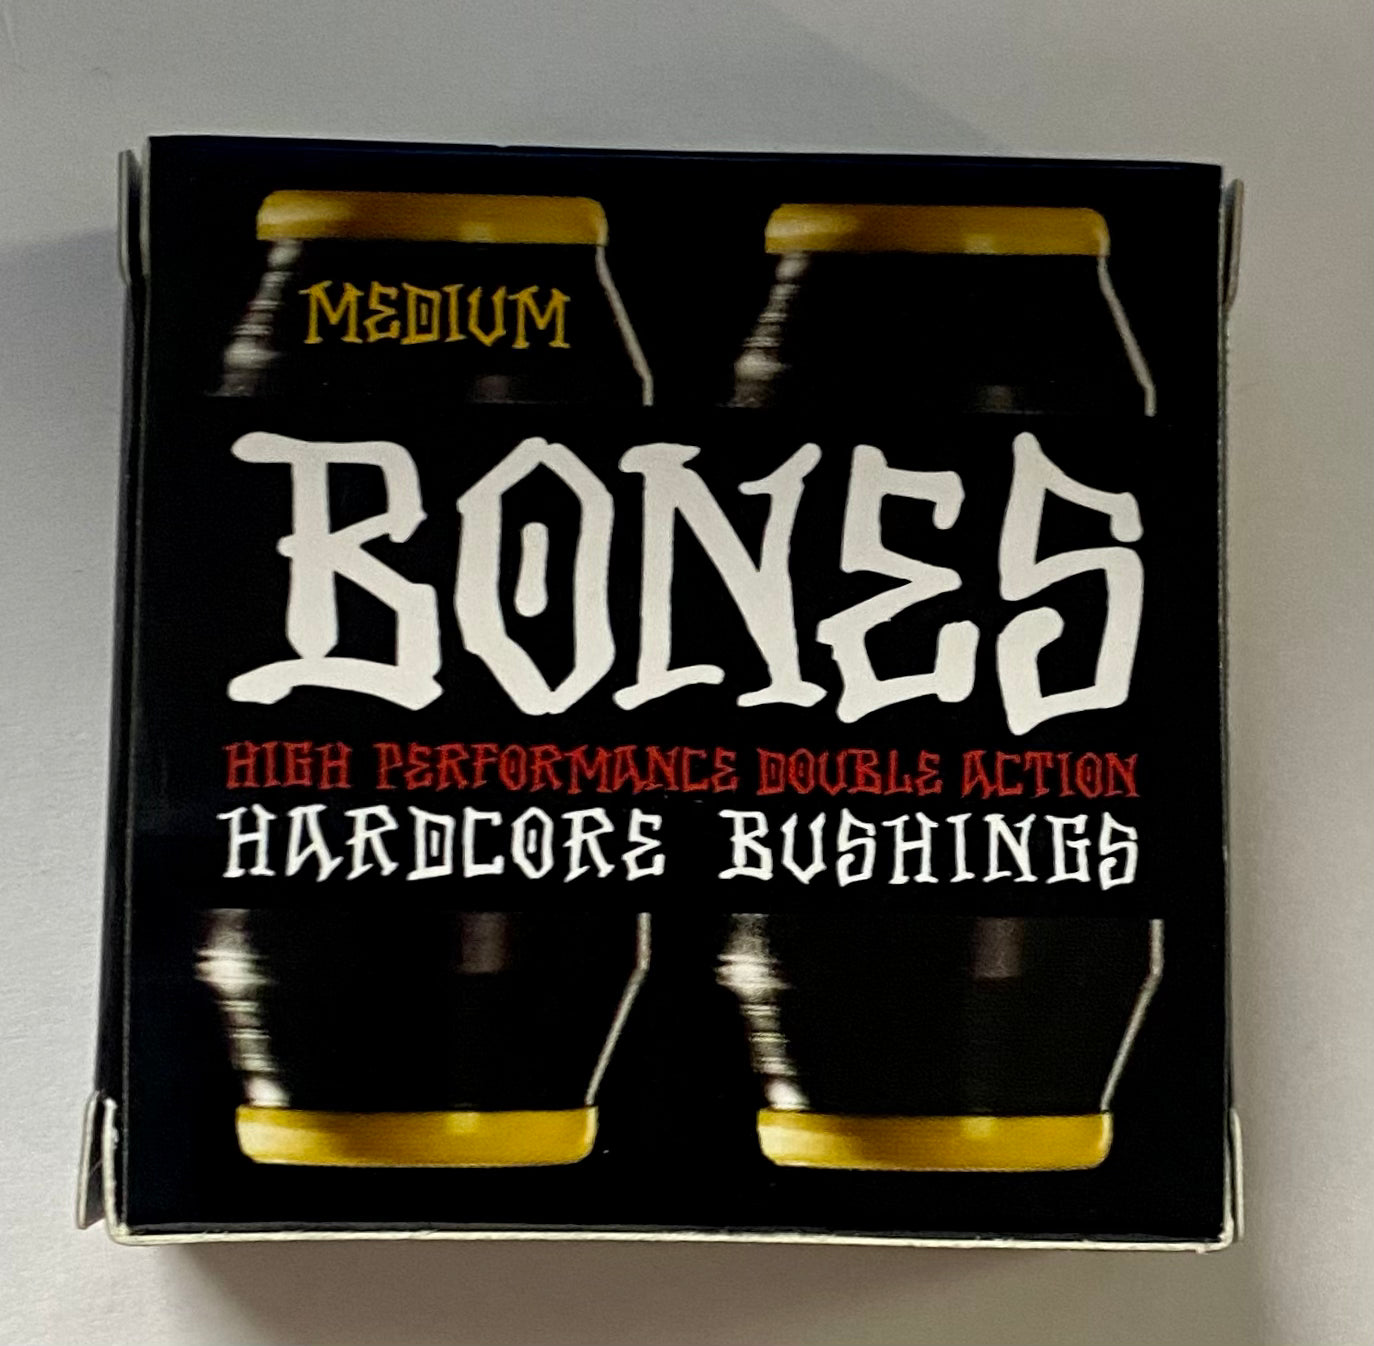 Bones Bushings soft/medium/hard